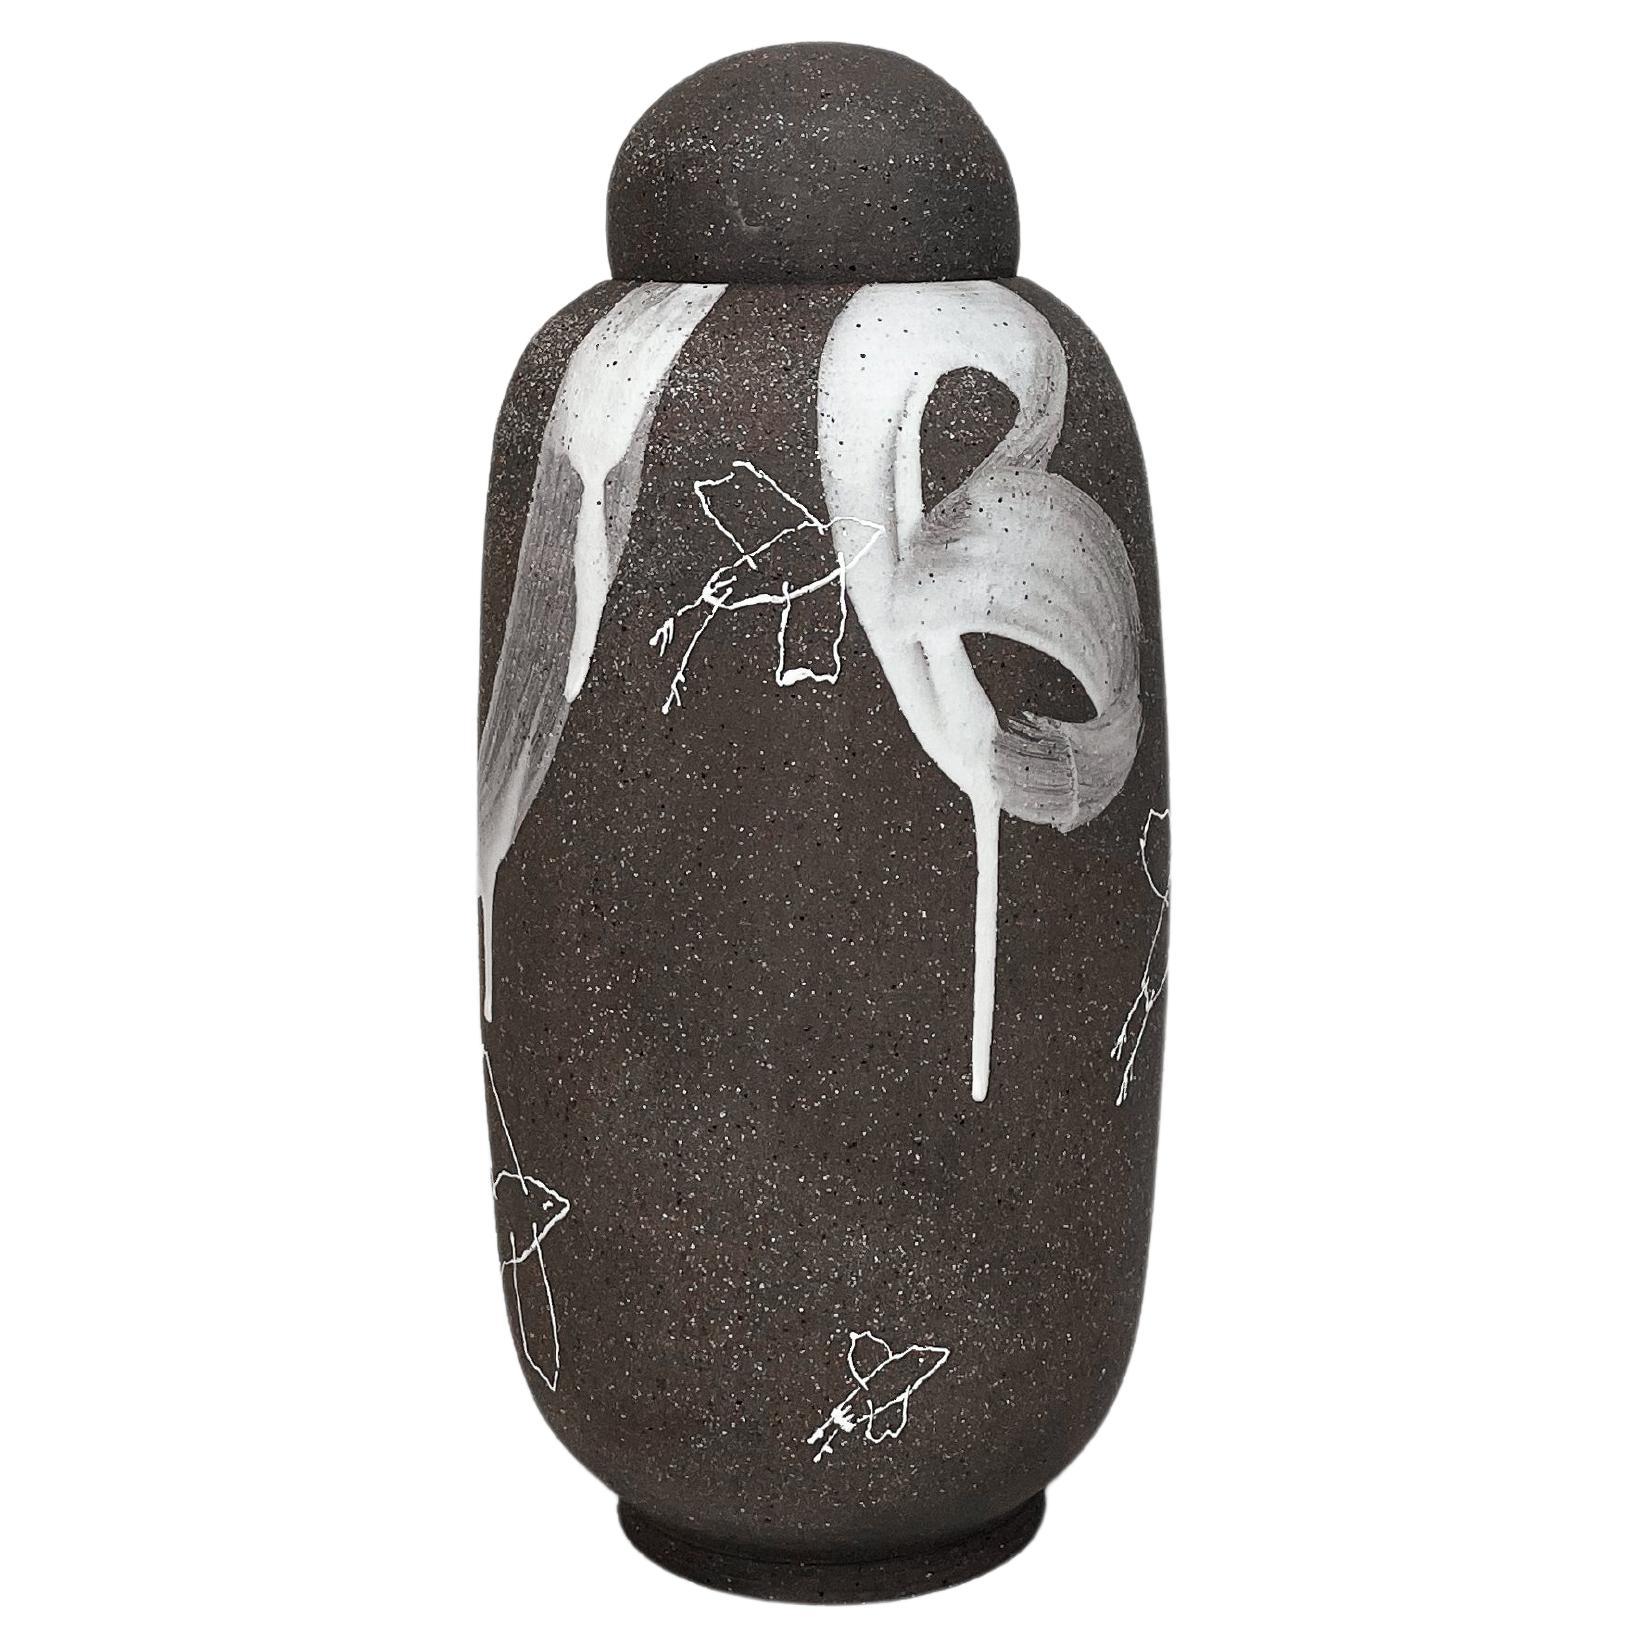 Vase aus Keramik – Weiße Lava-Kollektion im Angebot